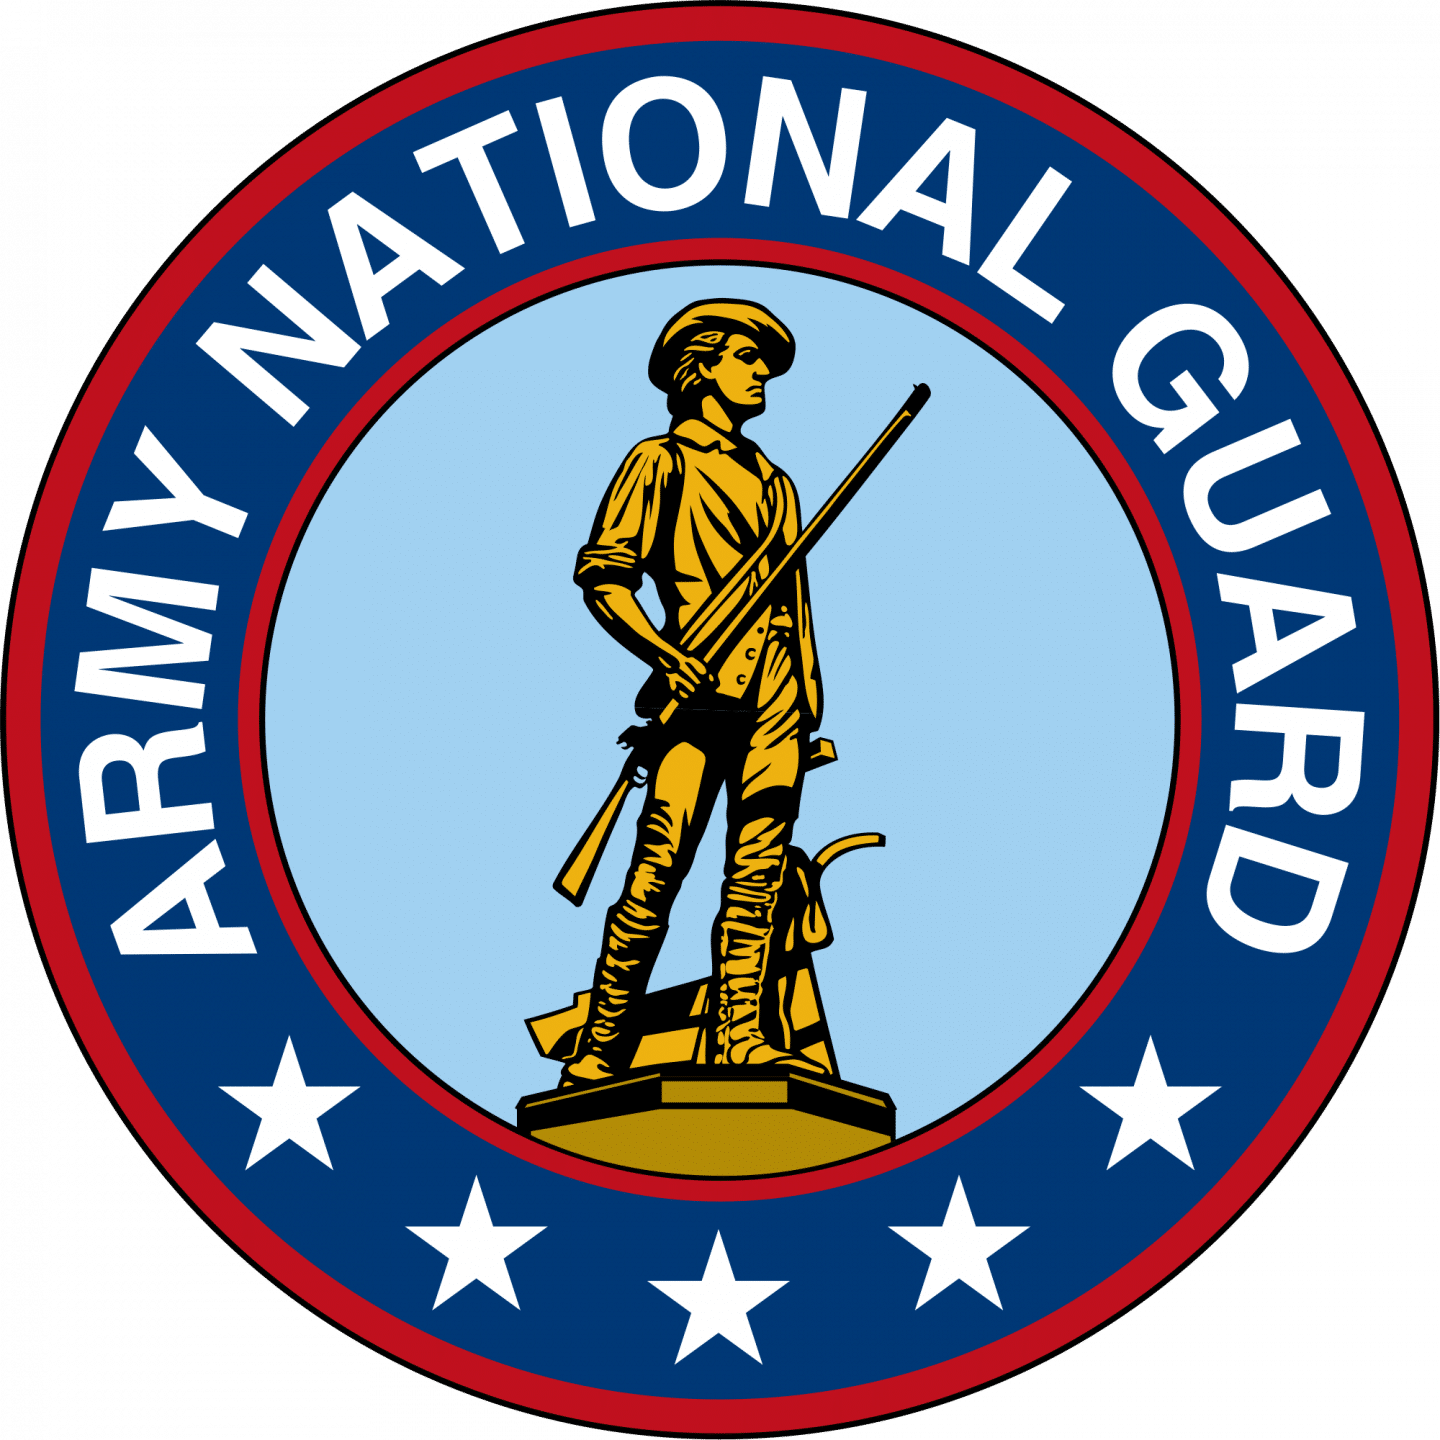 Army National Guard Logo